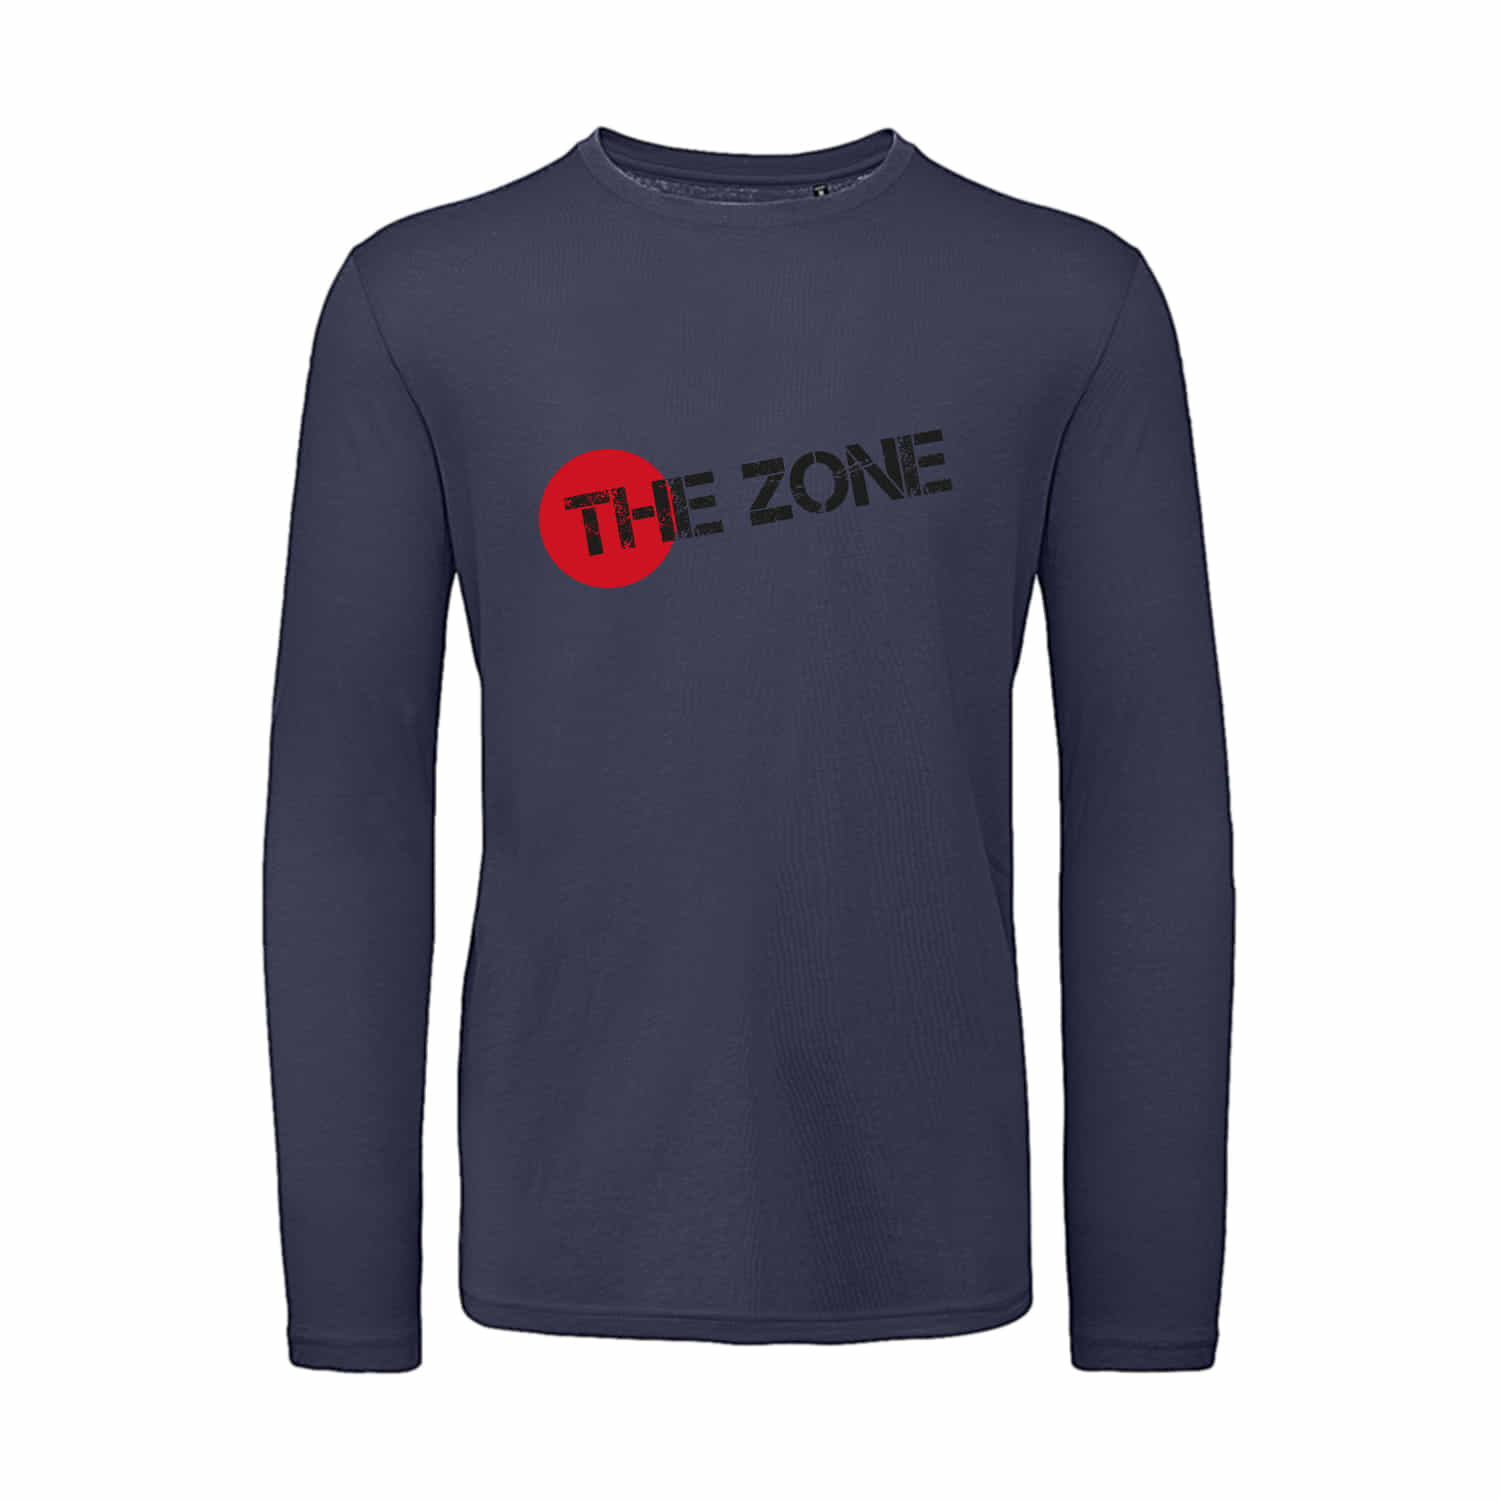 Herren Longsleeve "The Zone"